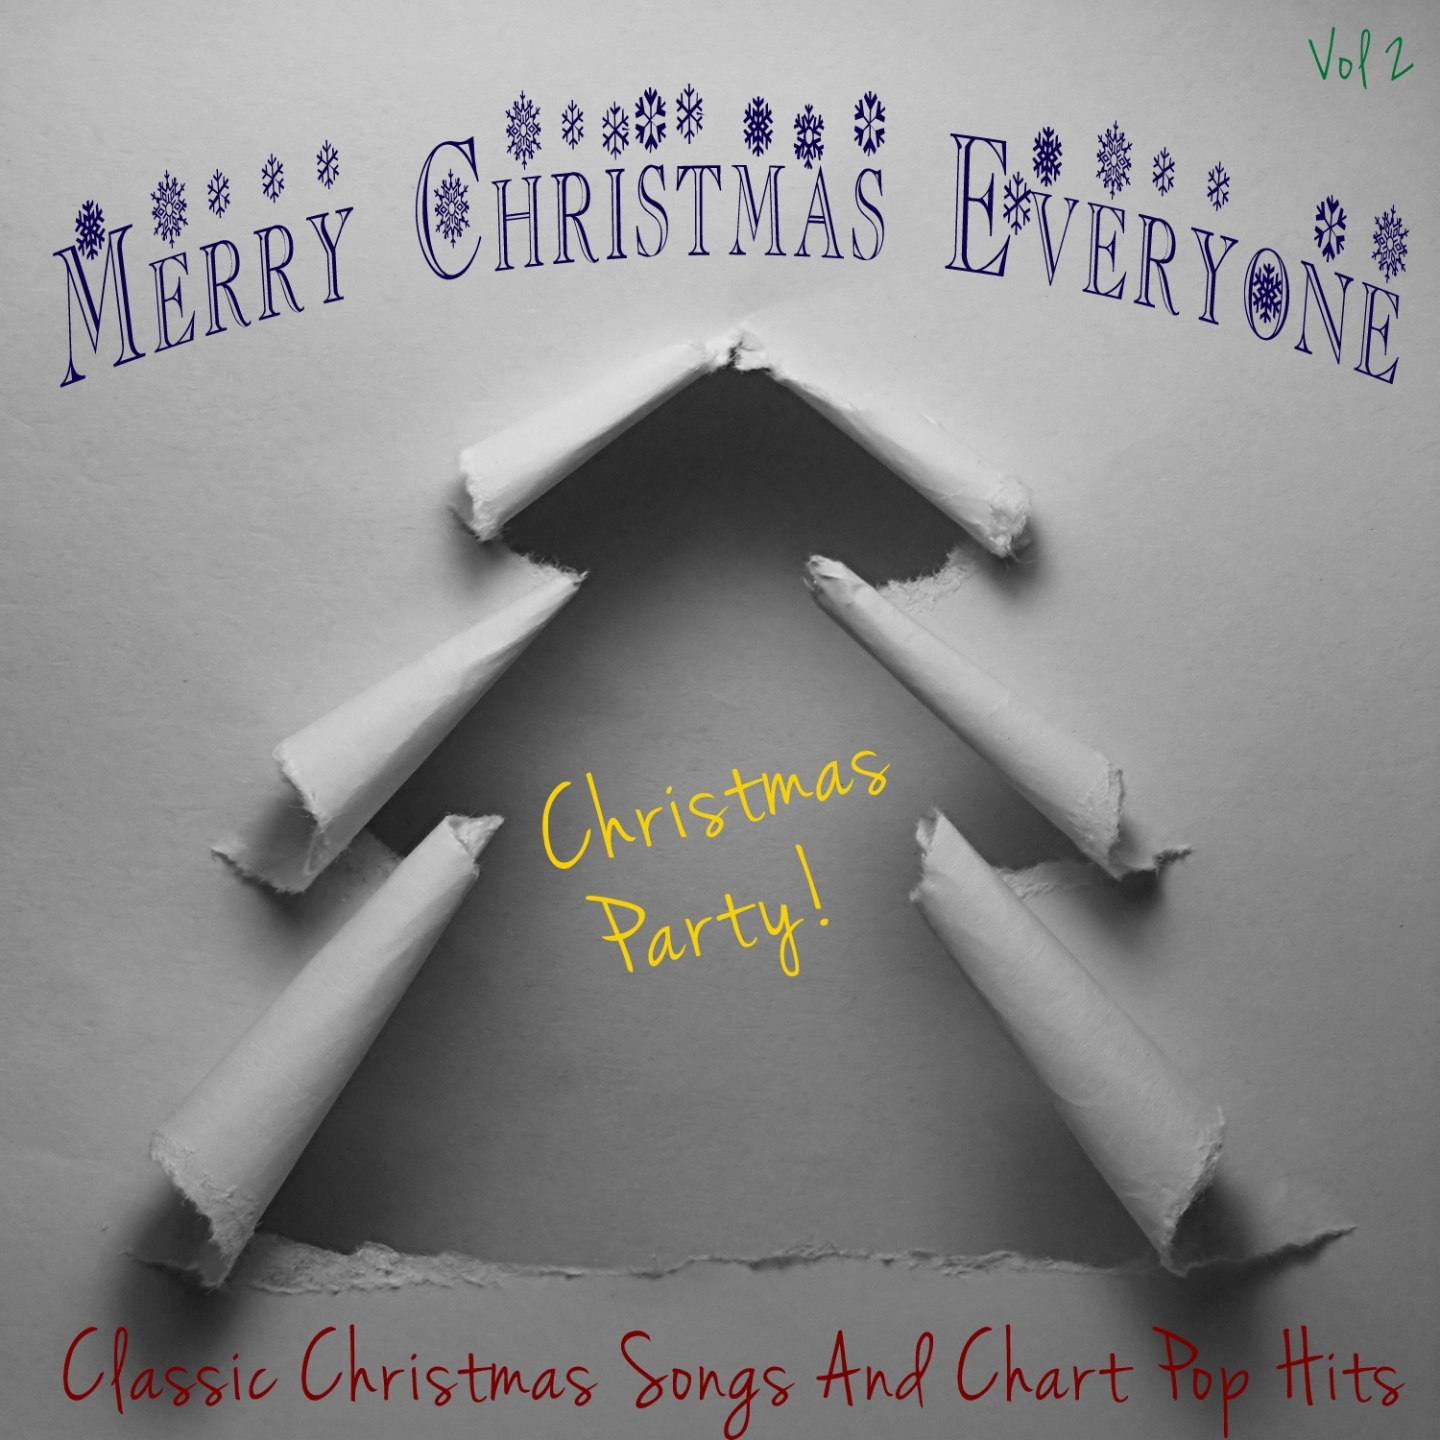 Merry Christmas Everyone - Christmas Party, Vol. 2